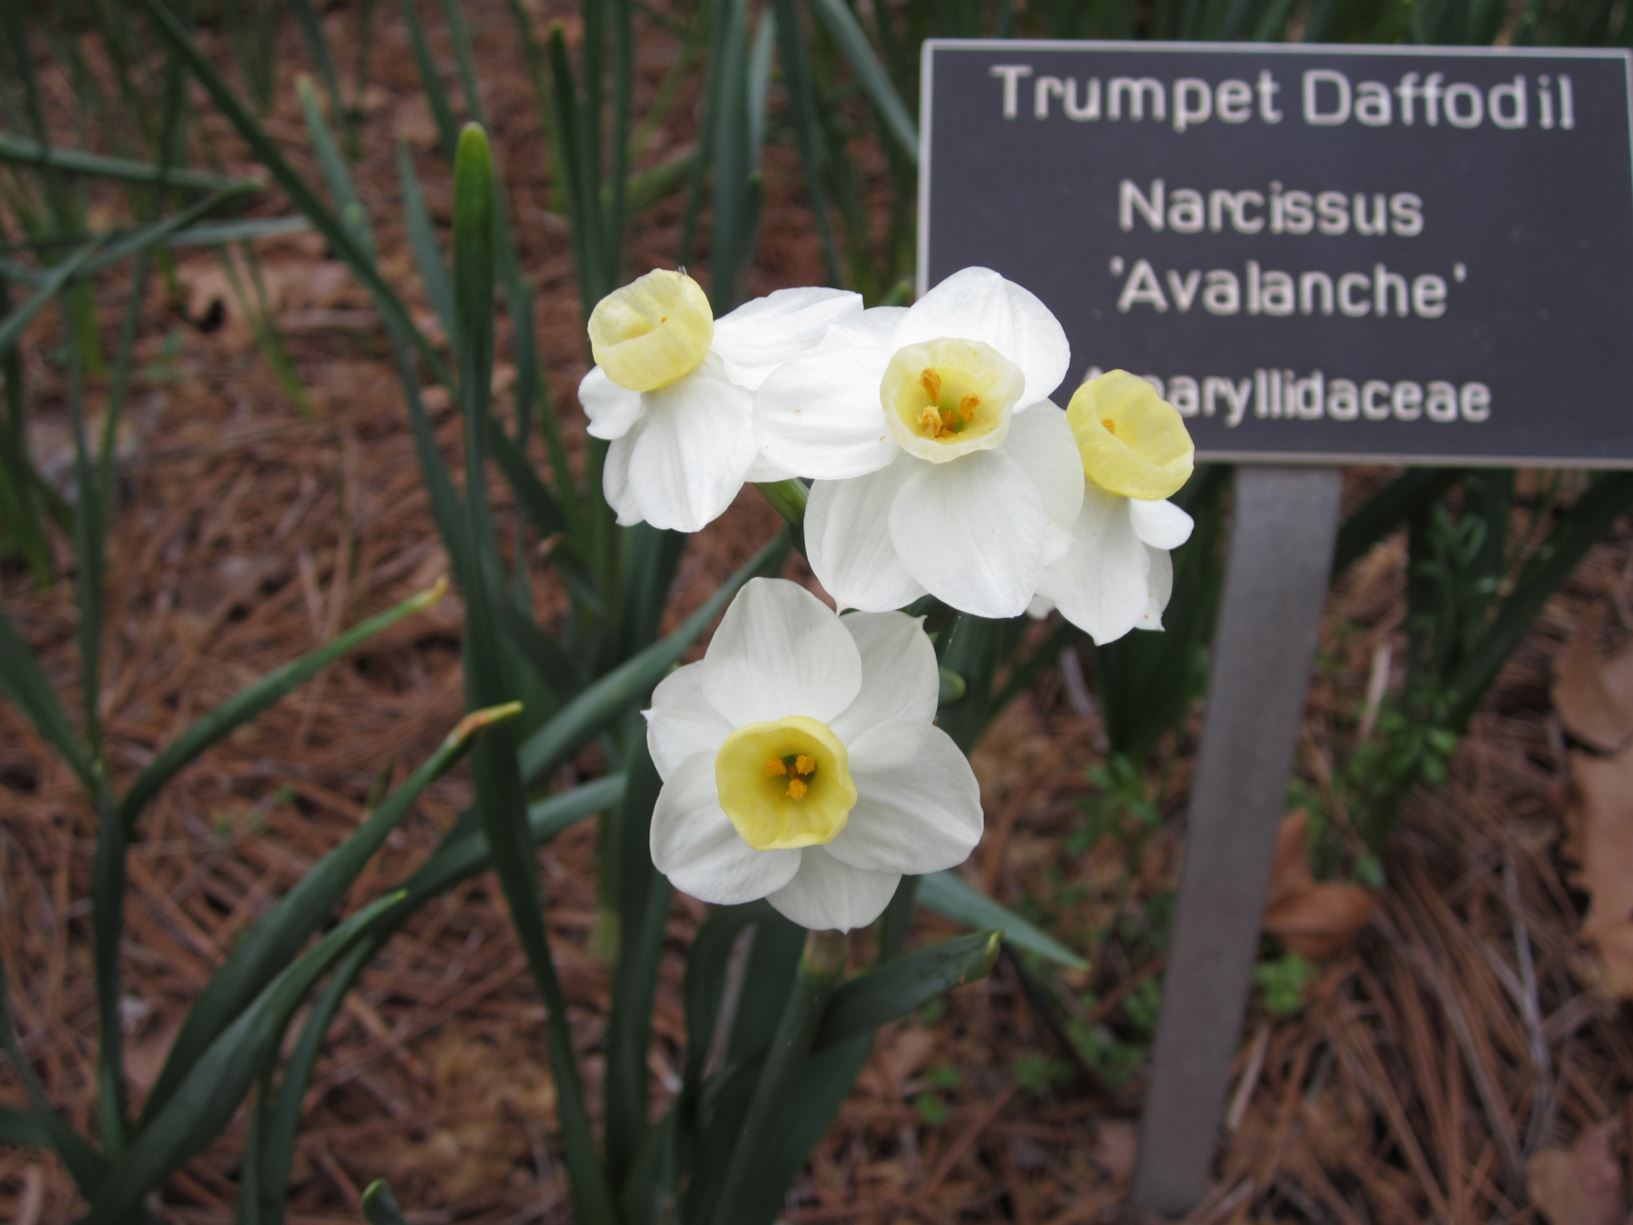 Narcissus 'Avalanche' - tazetta daffodil